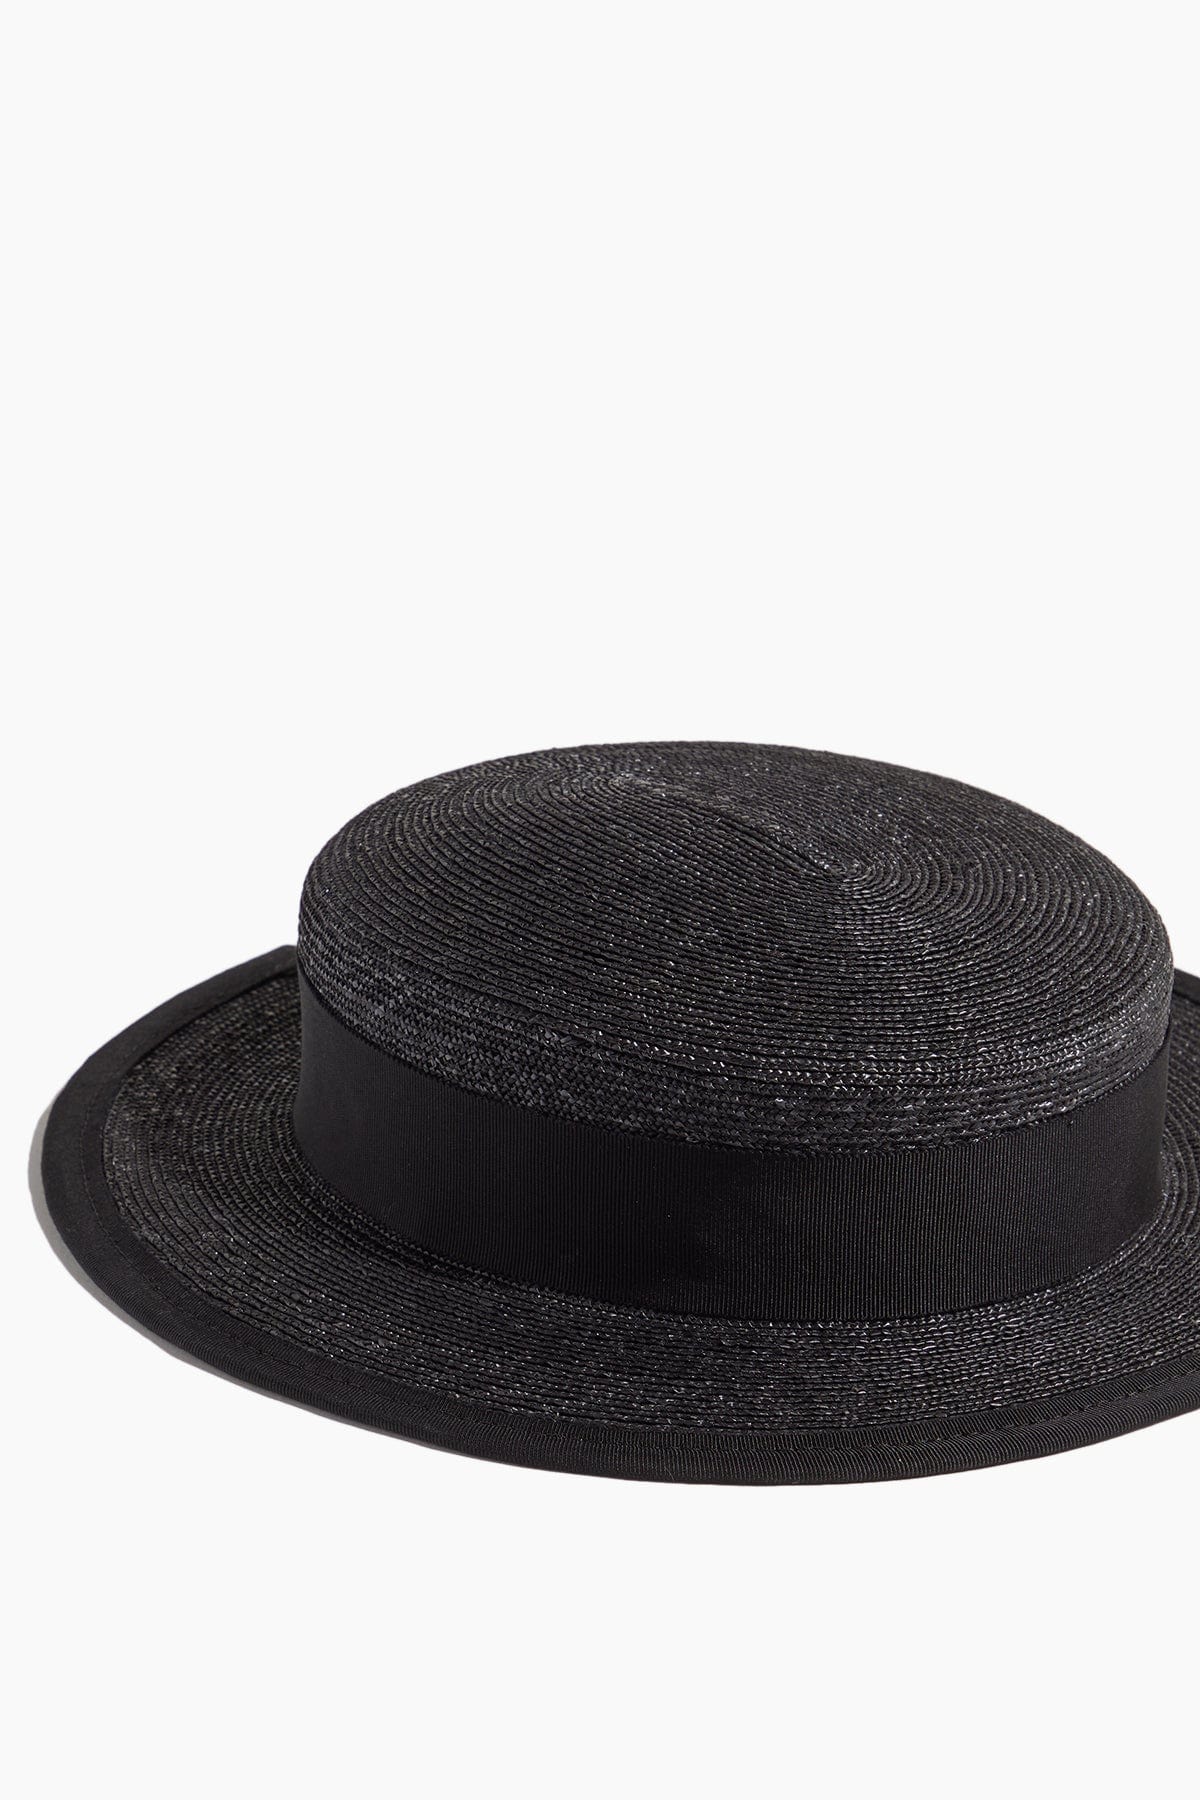 Gigi Burris Hats Bridgette Boater Hat in Black Gigi Burris Bridgette Boater Hat in Black